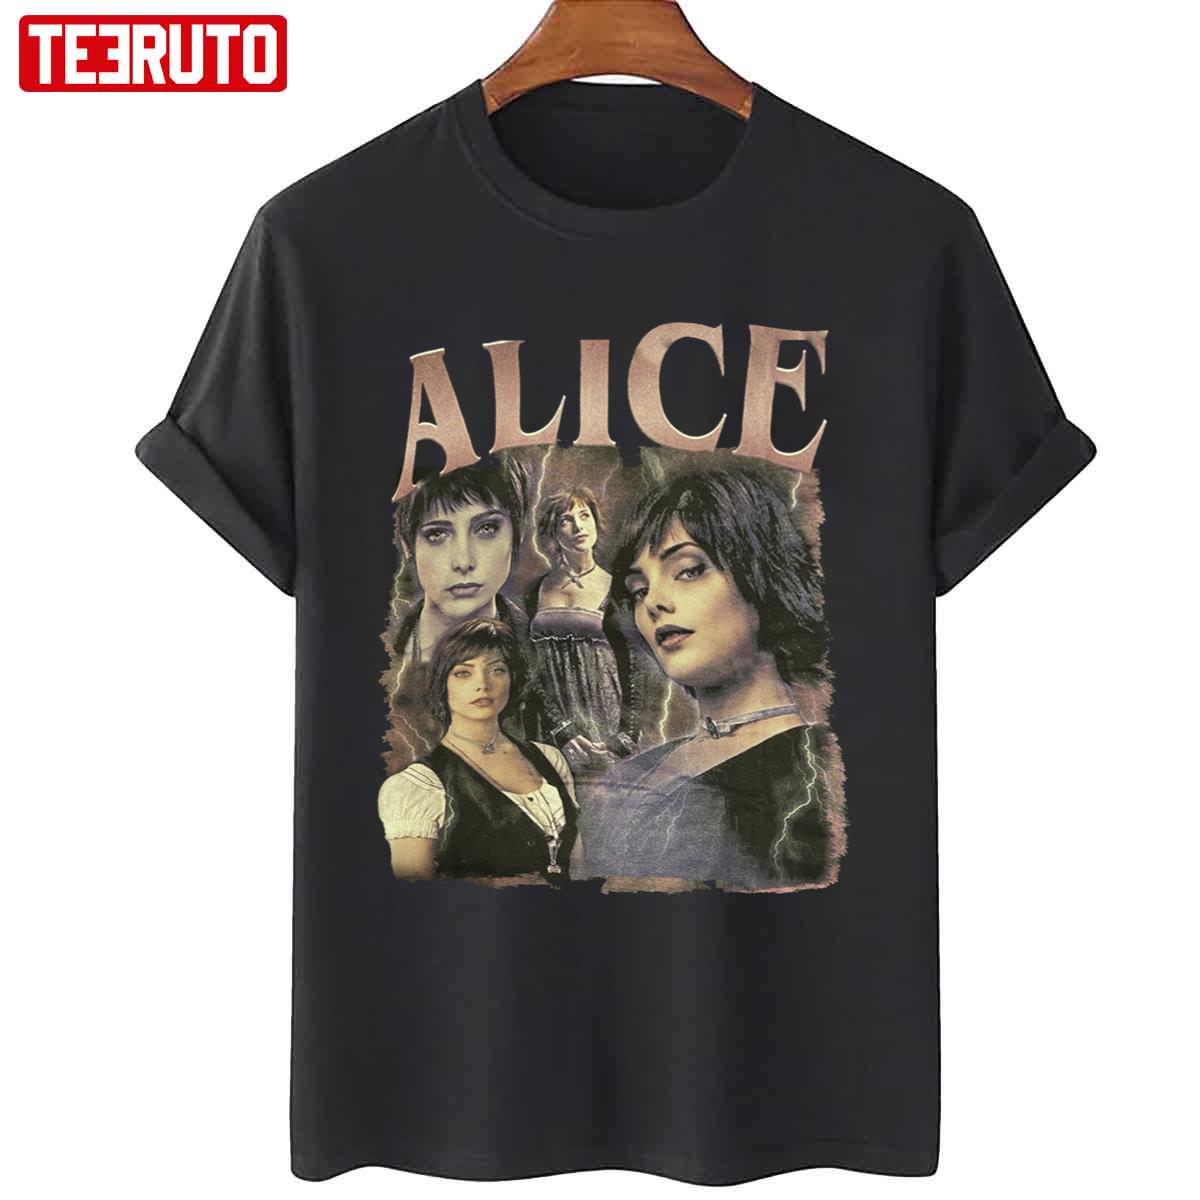 Alice Cullen Jasper Hale Movies The Twilight Saga Bootleg Unisex T-Shirt